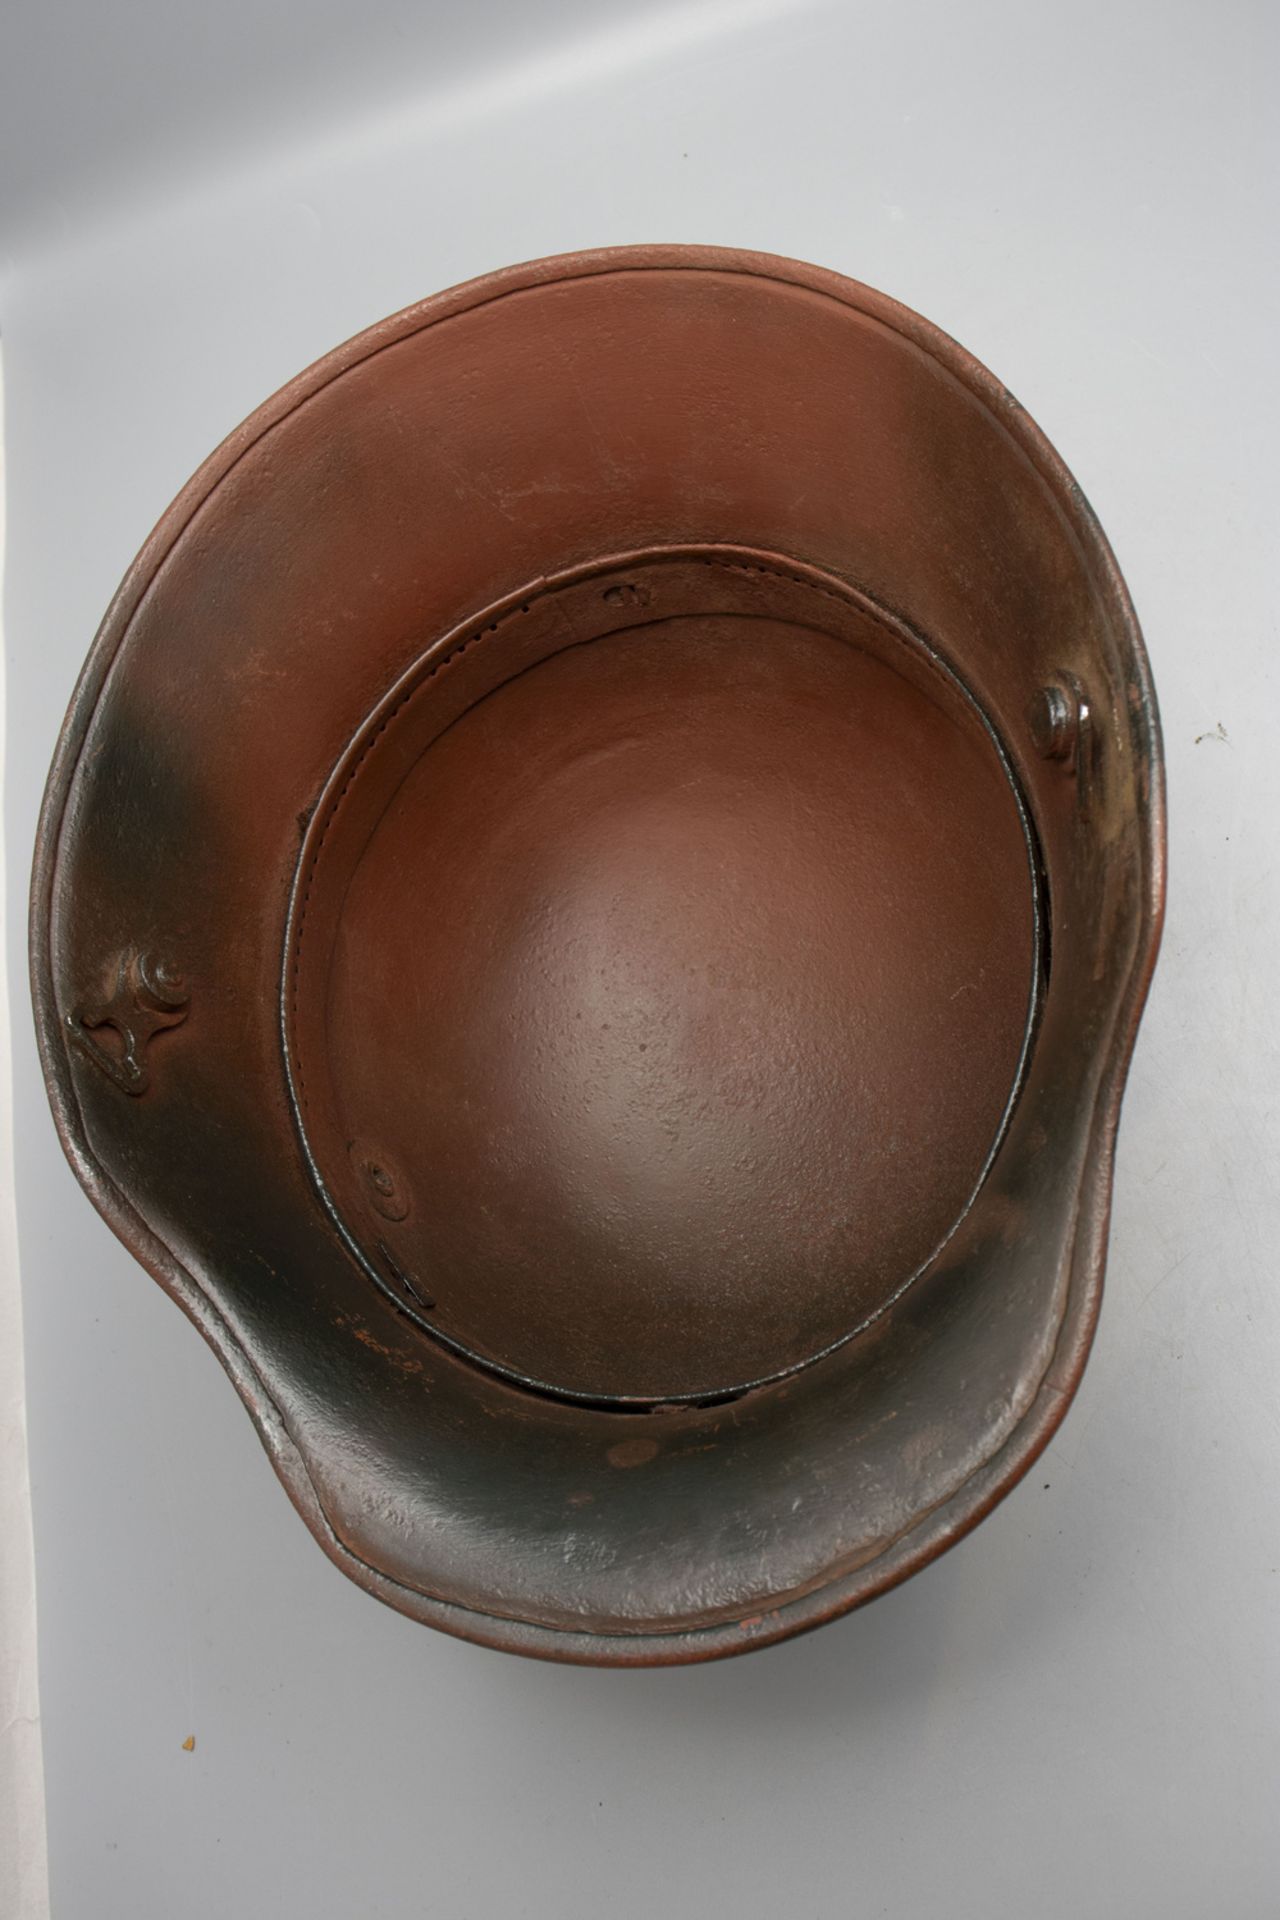 Stahlhelm mit Brille / A steel helmet with glasses - Image 3 of 3